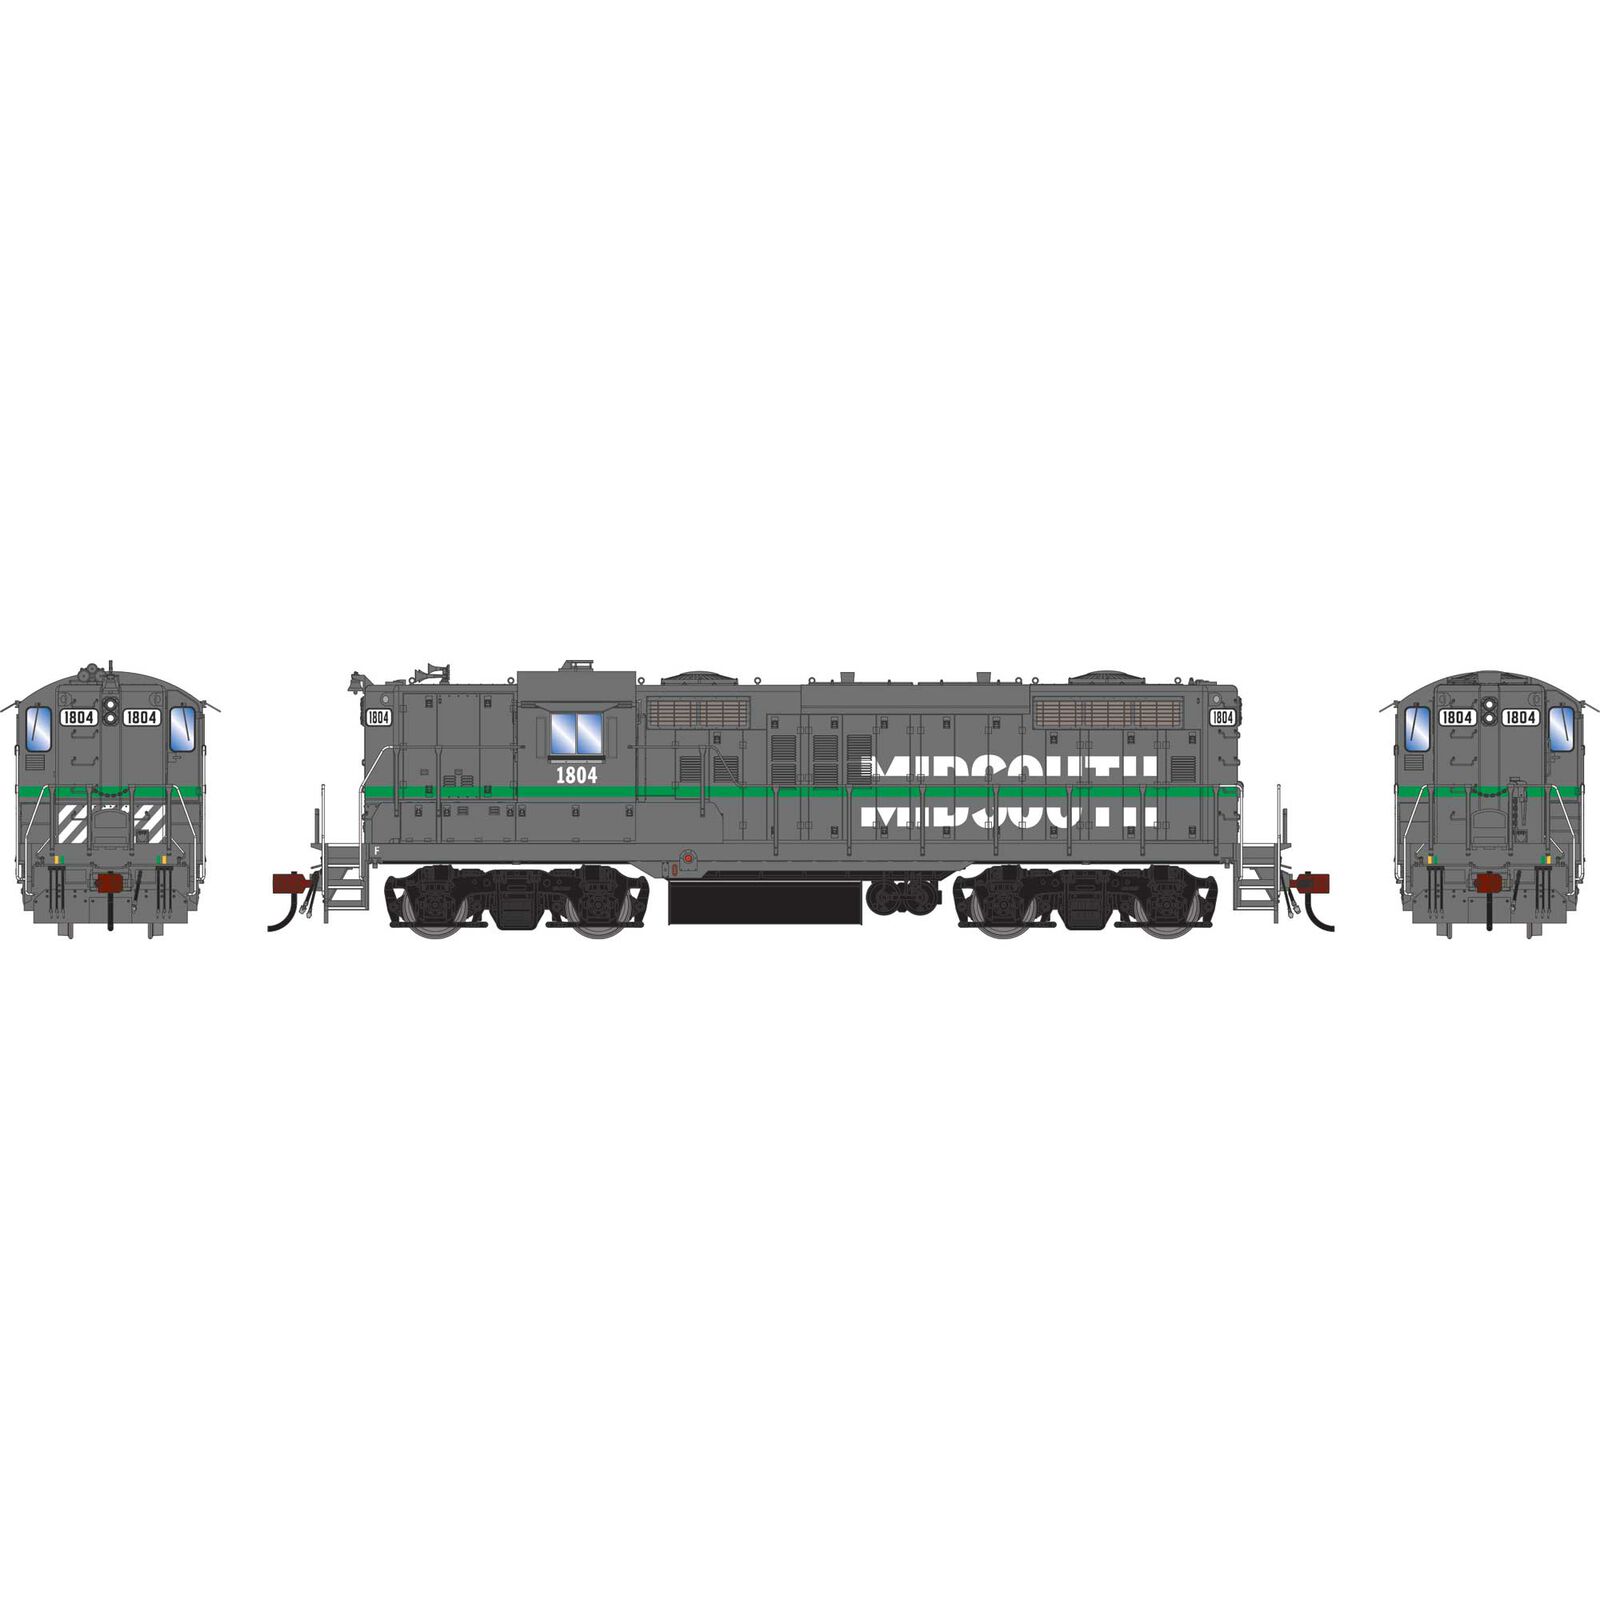 HO GP18 Locomotive with DCC & Sound, MSRC #1804